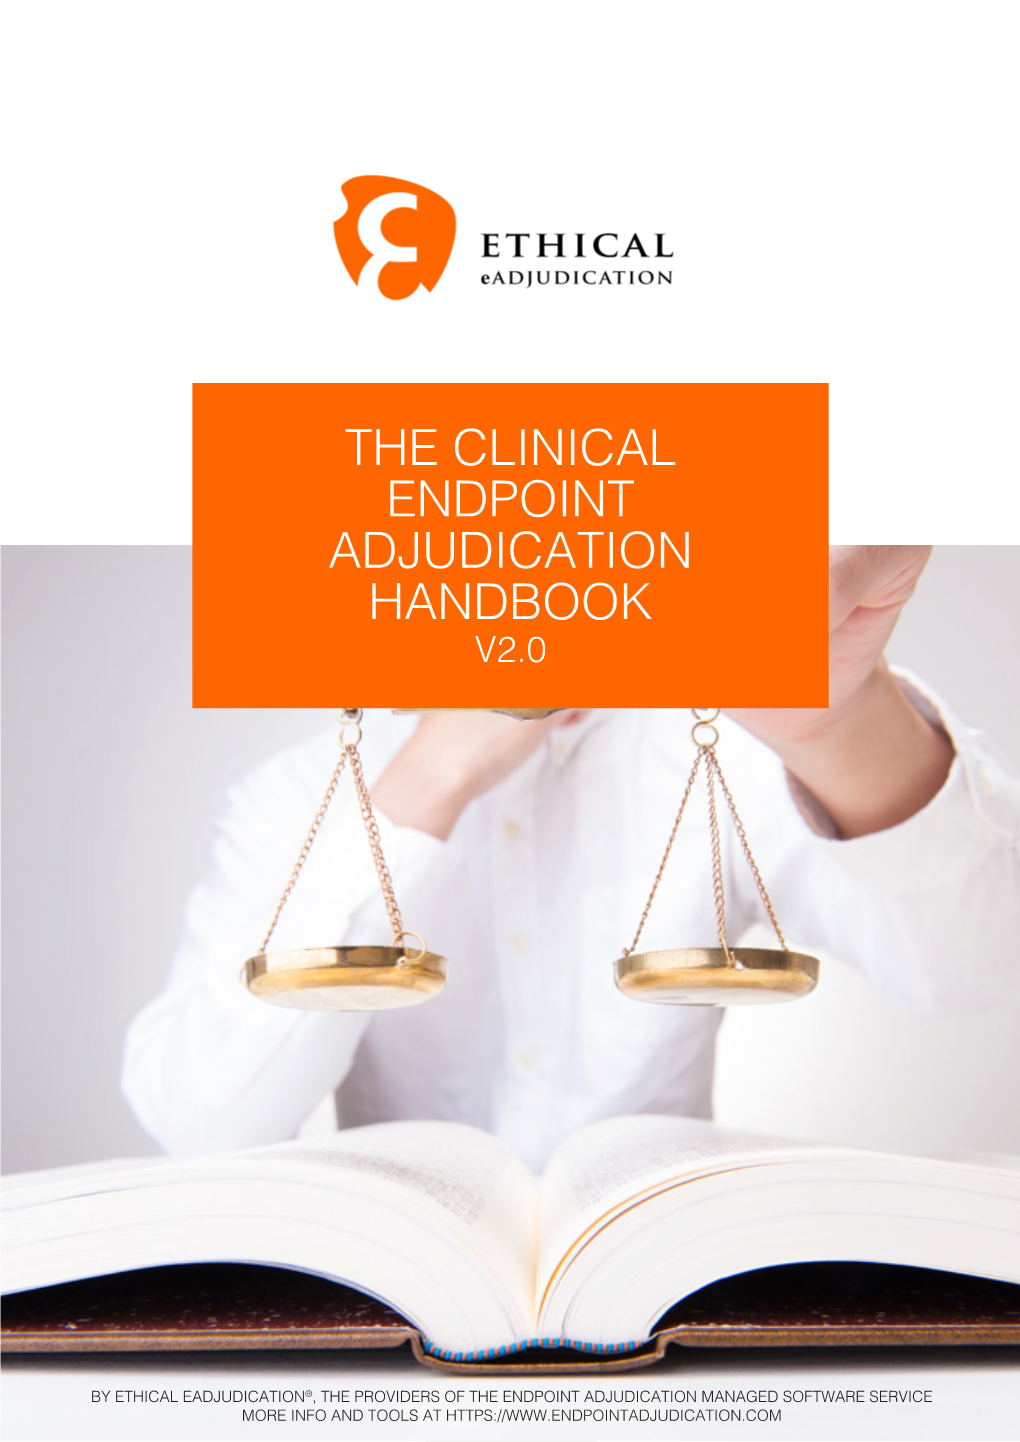 The Clinical Endpoint Adjudication Handbook V2.0